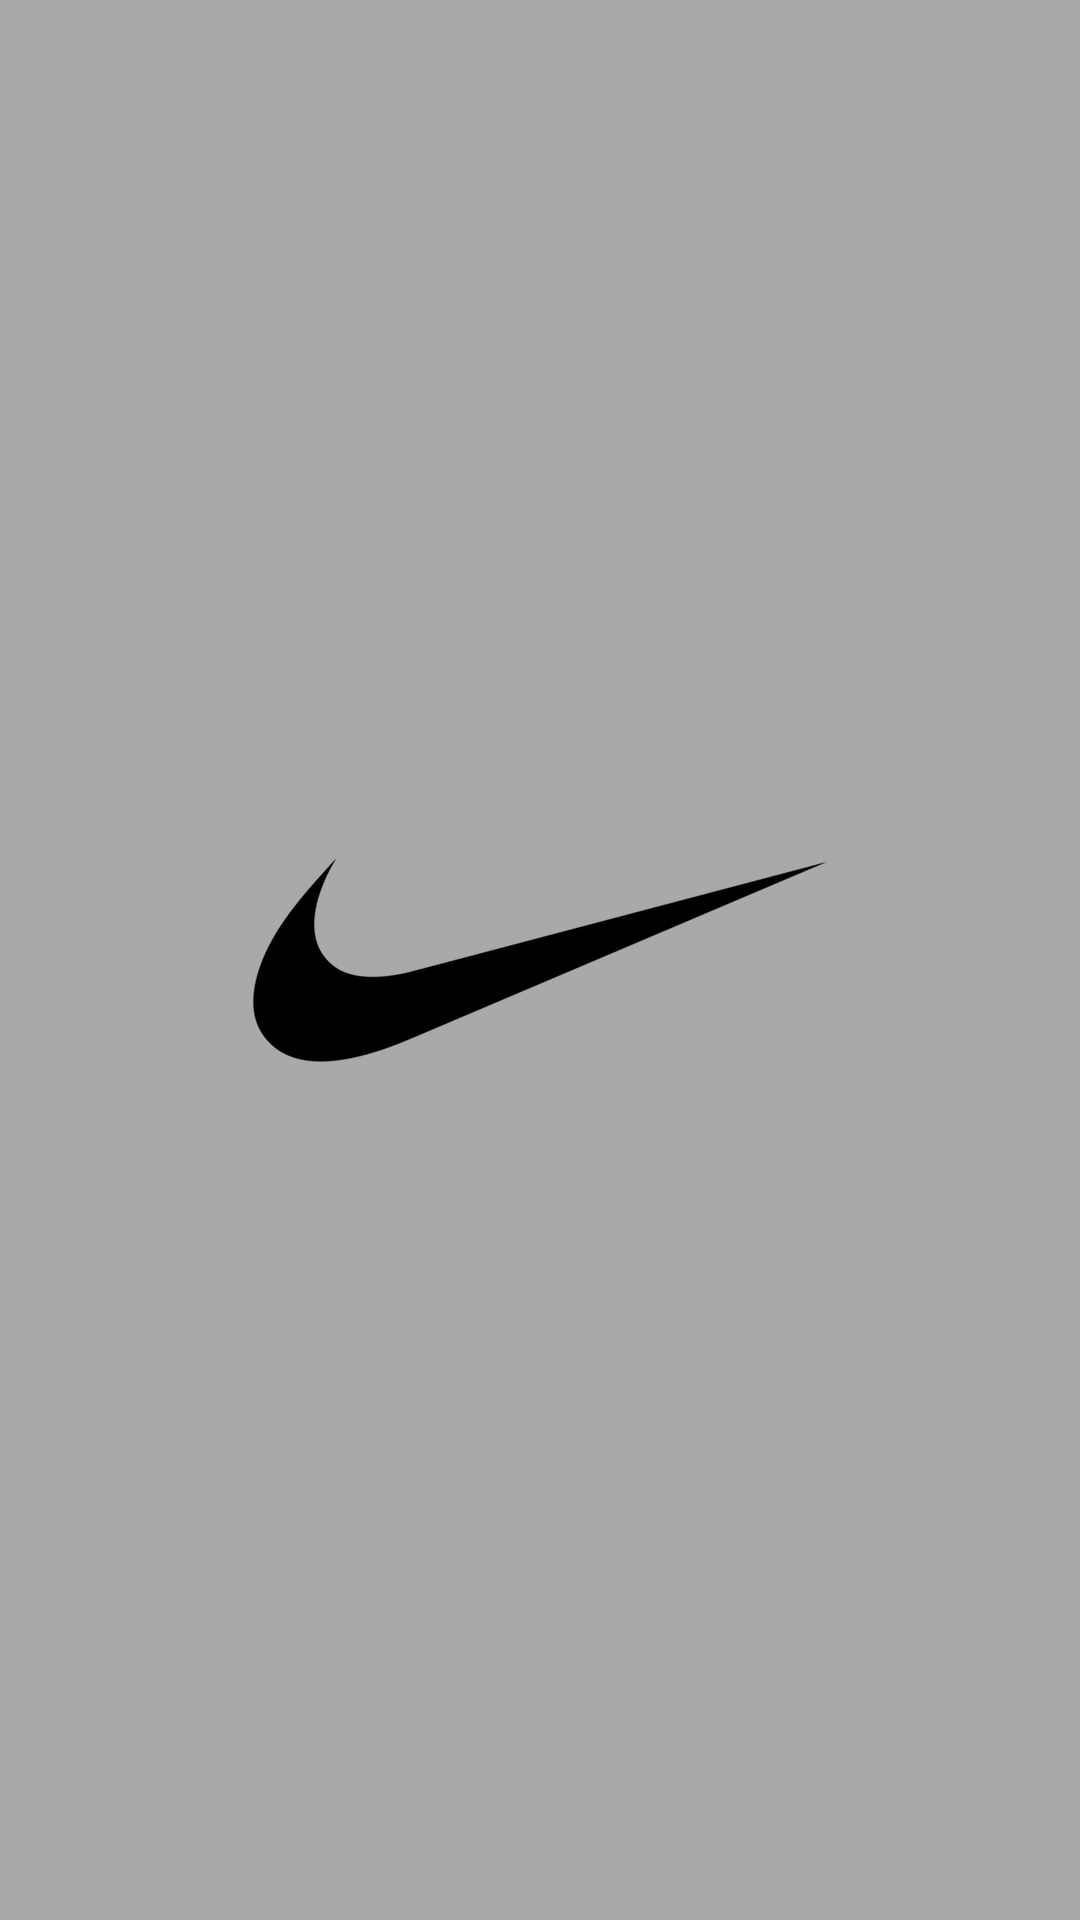 The nike logo on a grey background - Nike